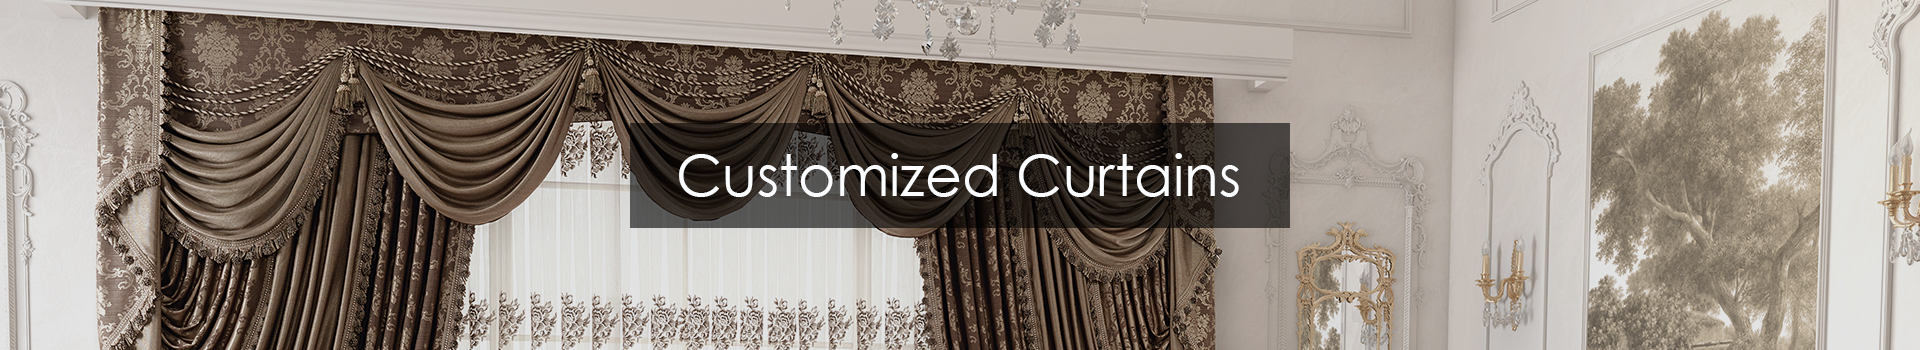 Customized Curtains in Dubai & Abu Dhabi